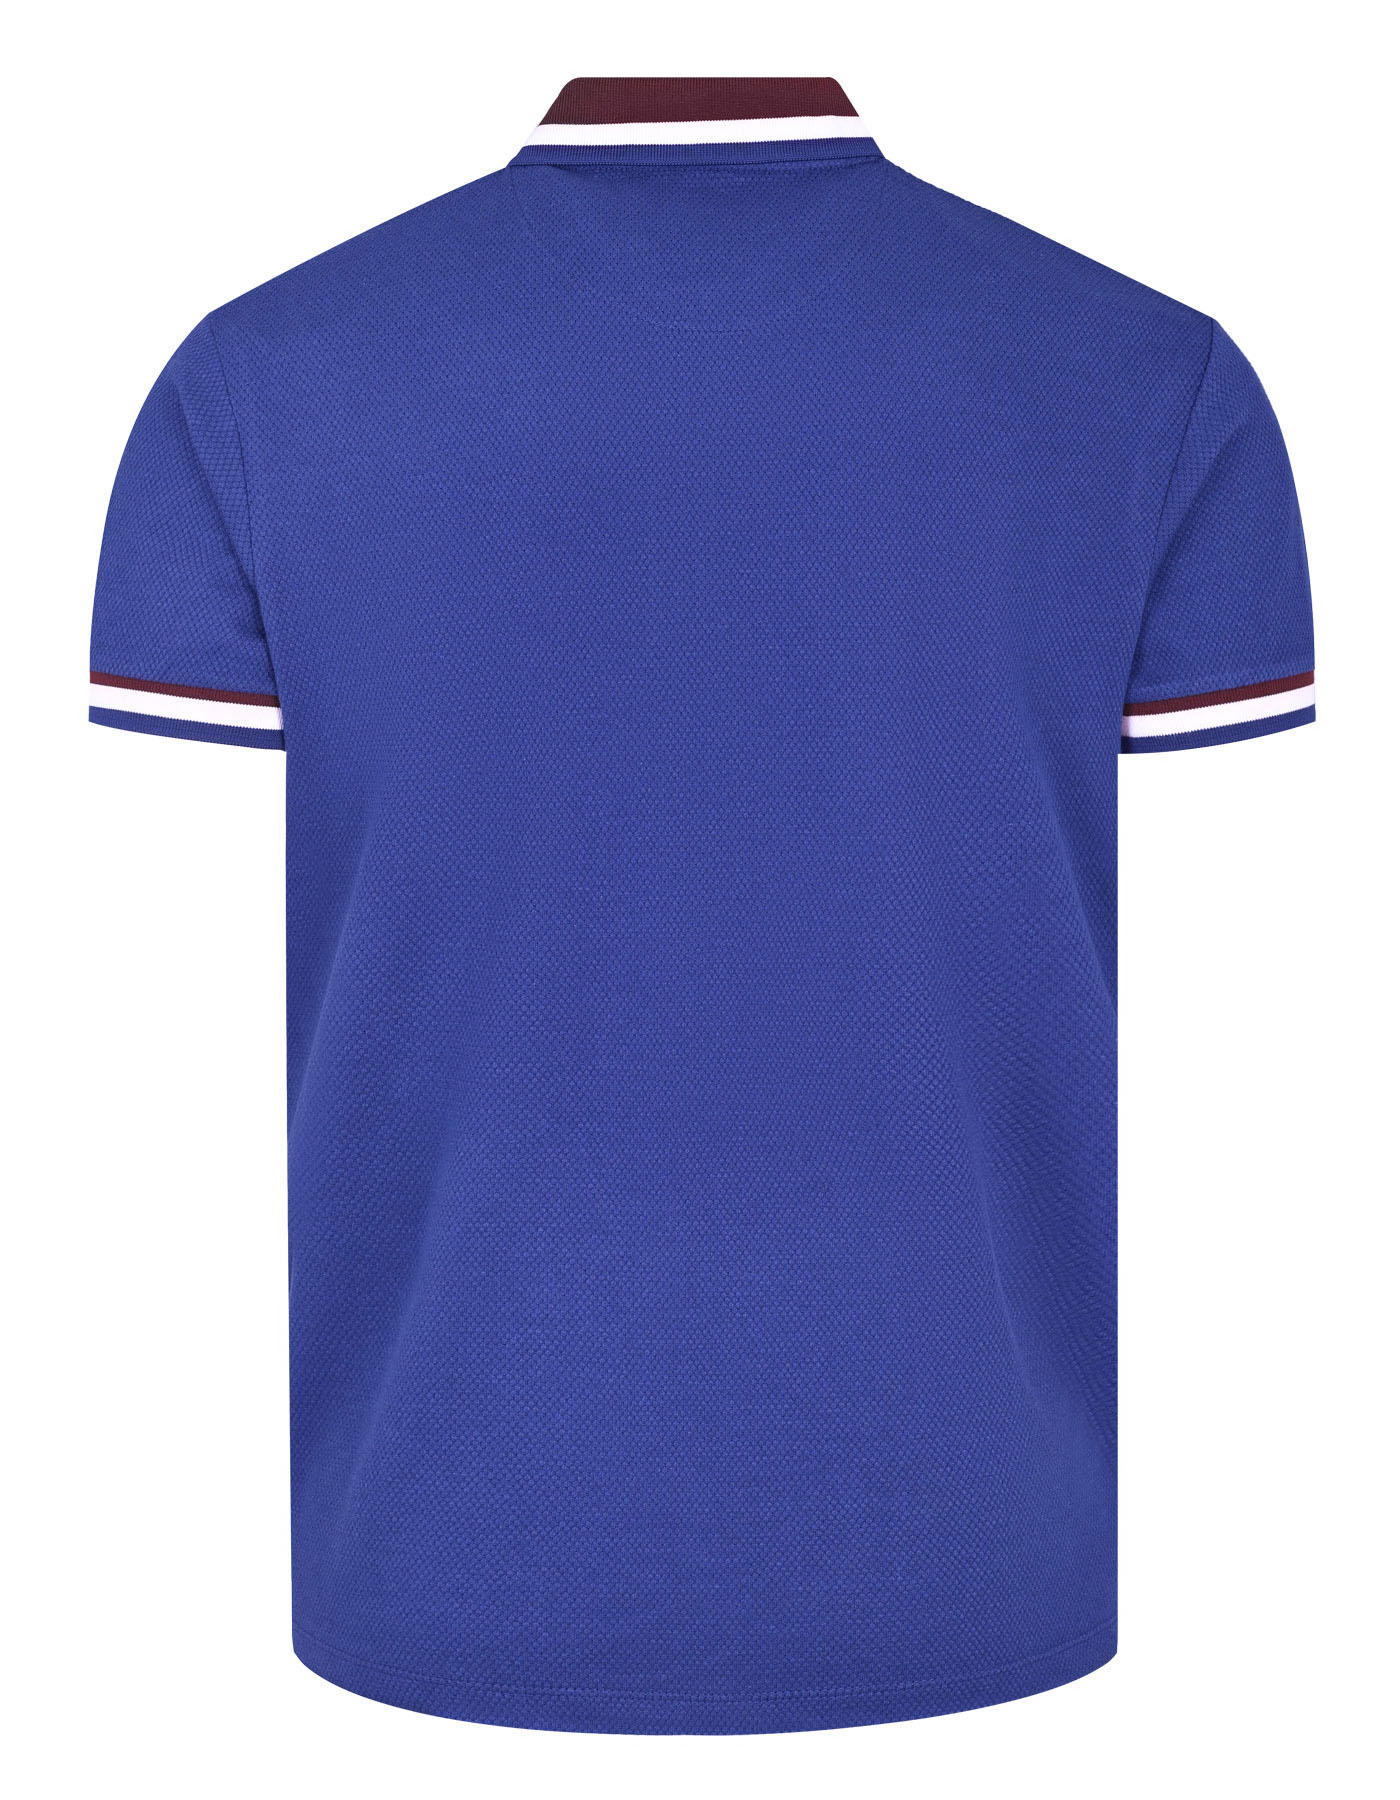 Navy Cotton Polo Shirt For Men | Uniworth